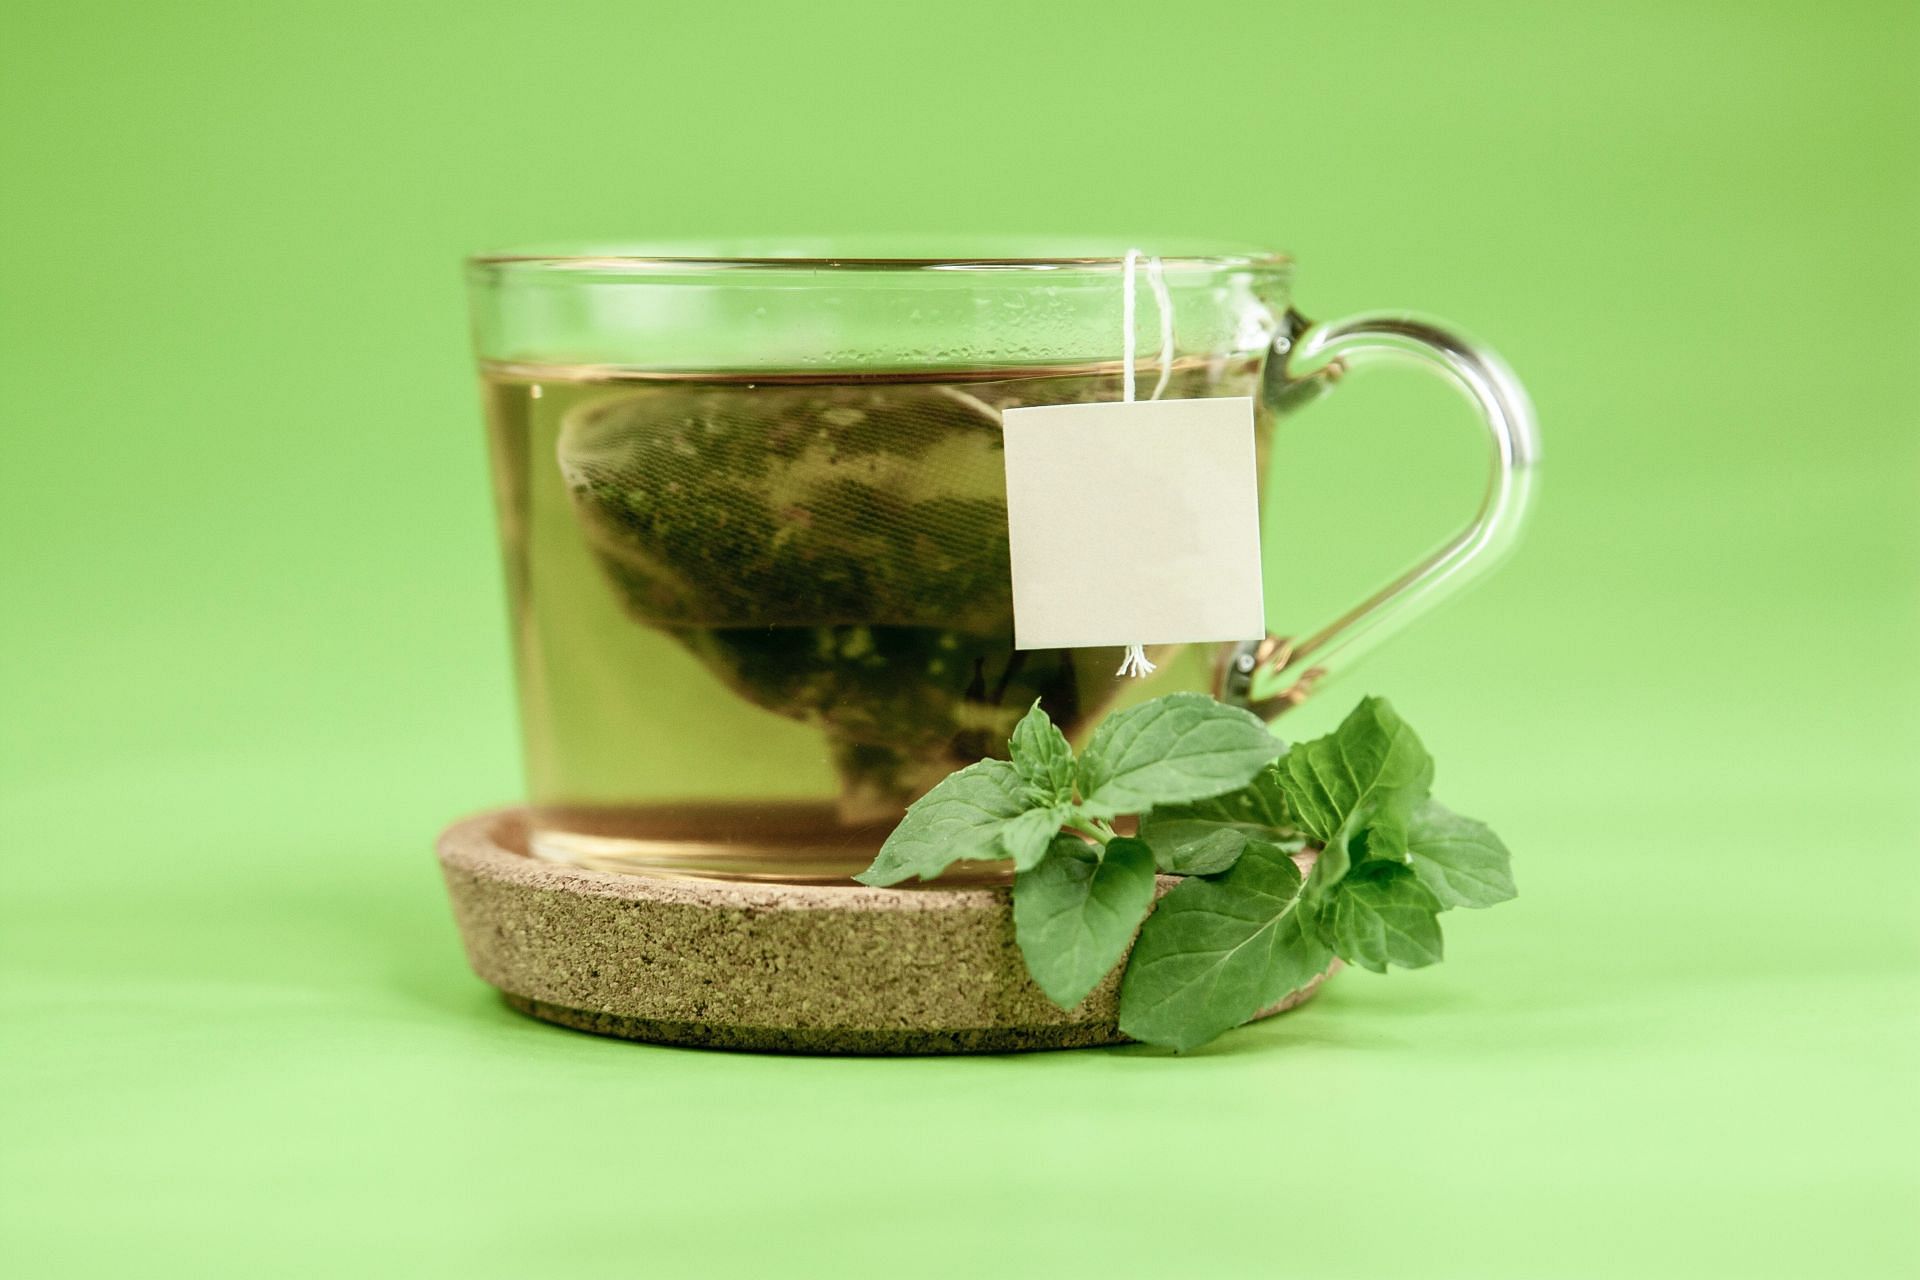 Drinking green tea before bed has potential health benefits. (Image via Unsplash/Laark Boshoff)